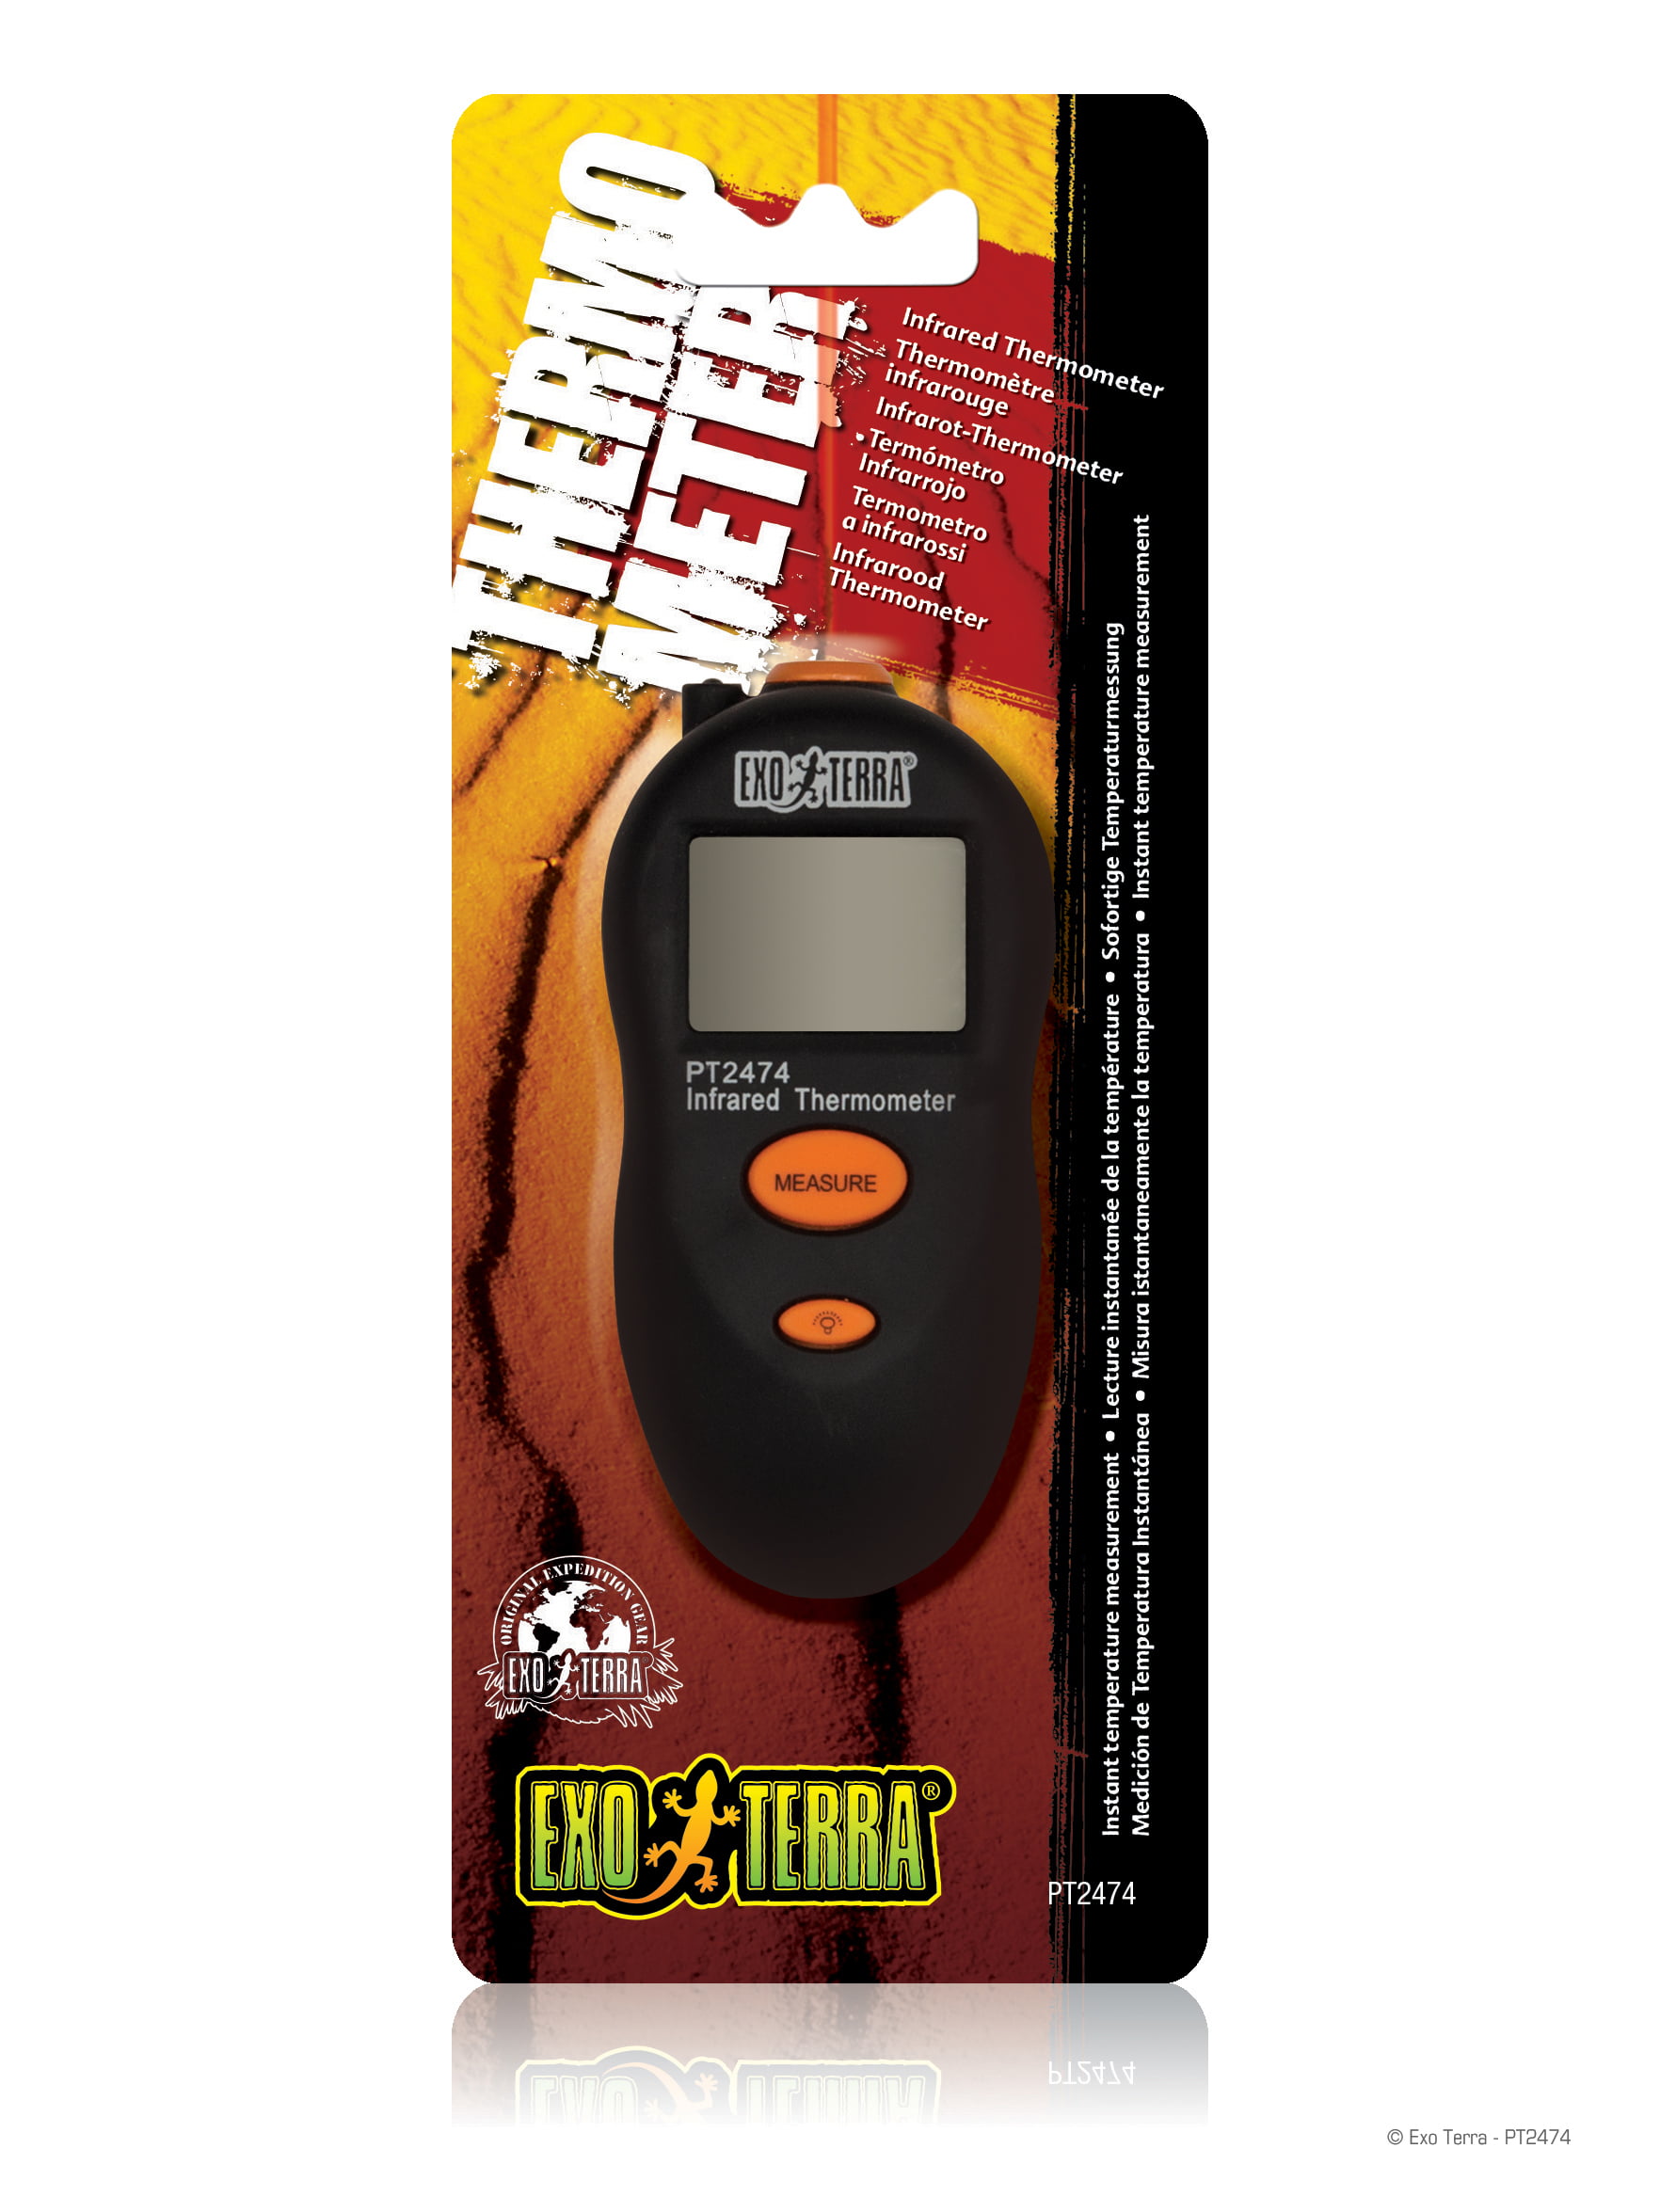 Ex Infrarood Thermometer